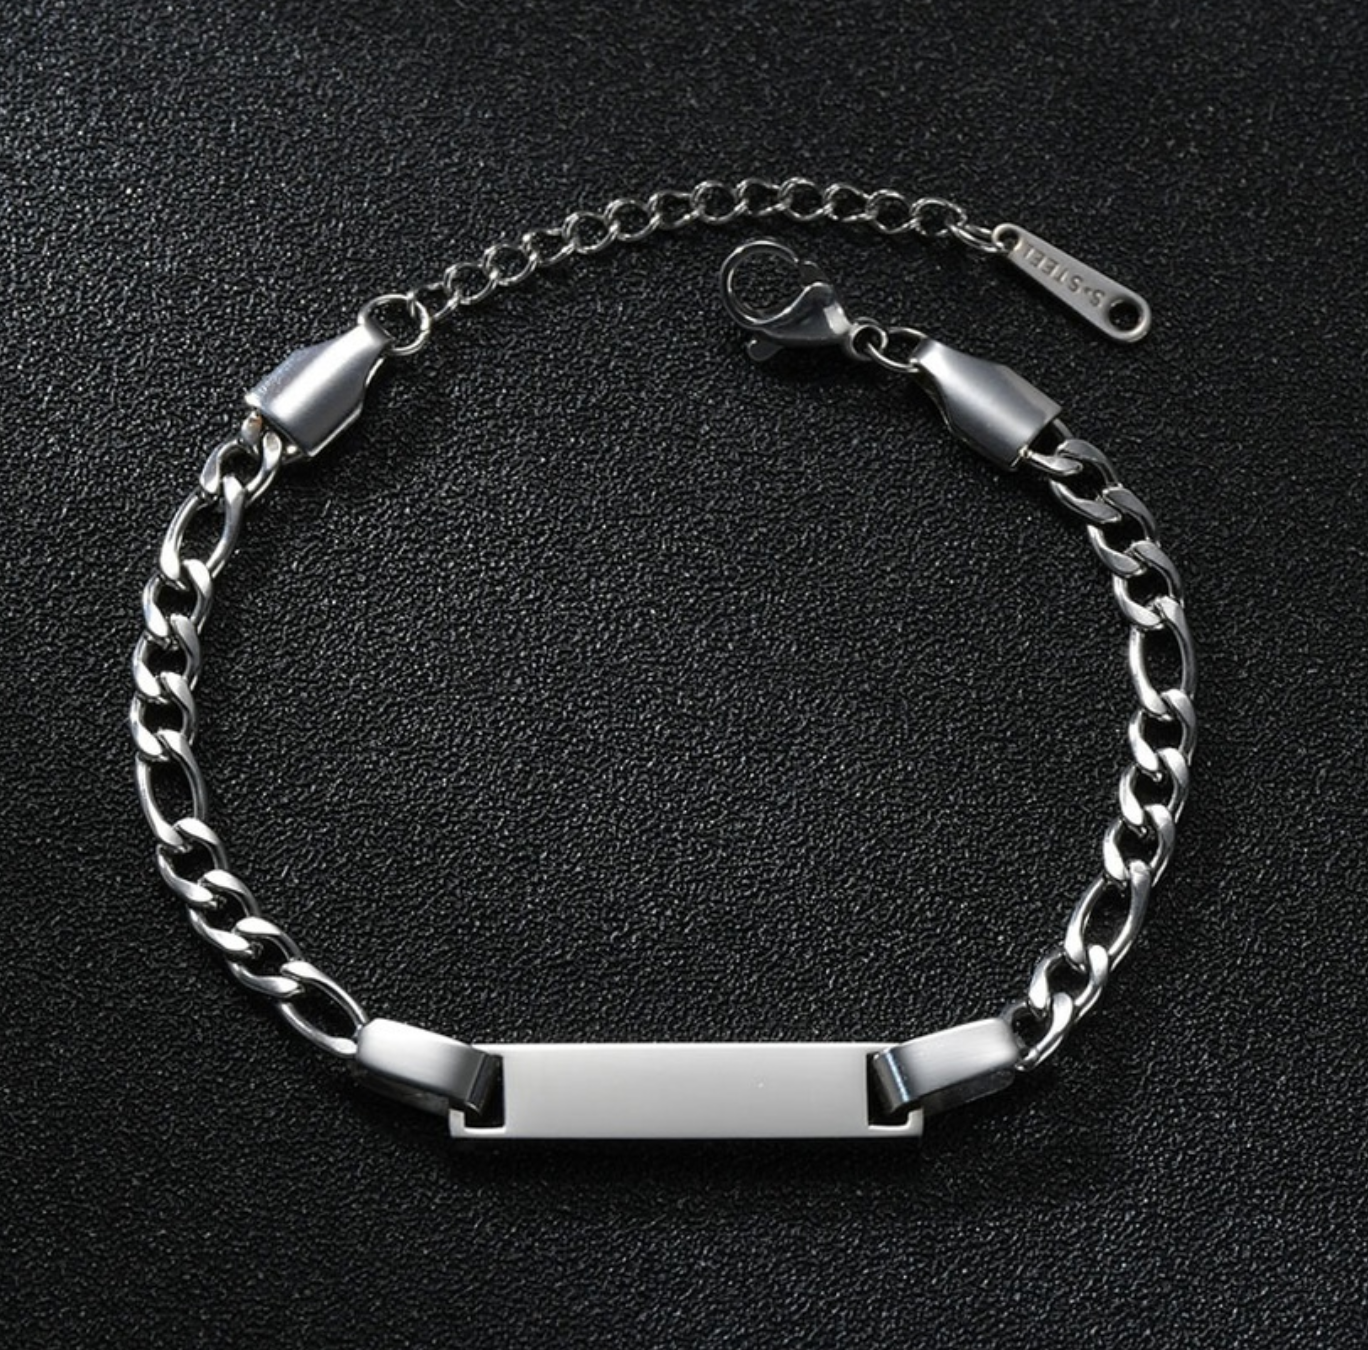 Adjustable Chain Figaro Linked Charm Bracelet Bar Silver Womens Jewellery Gift